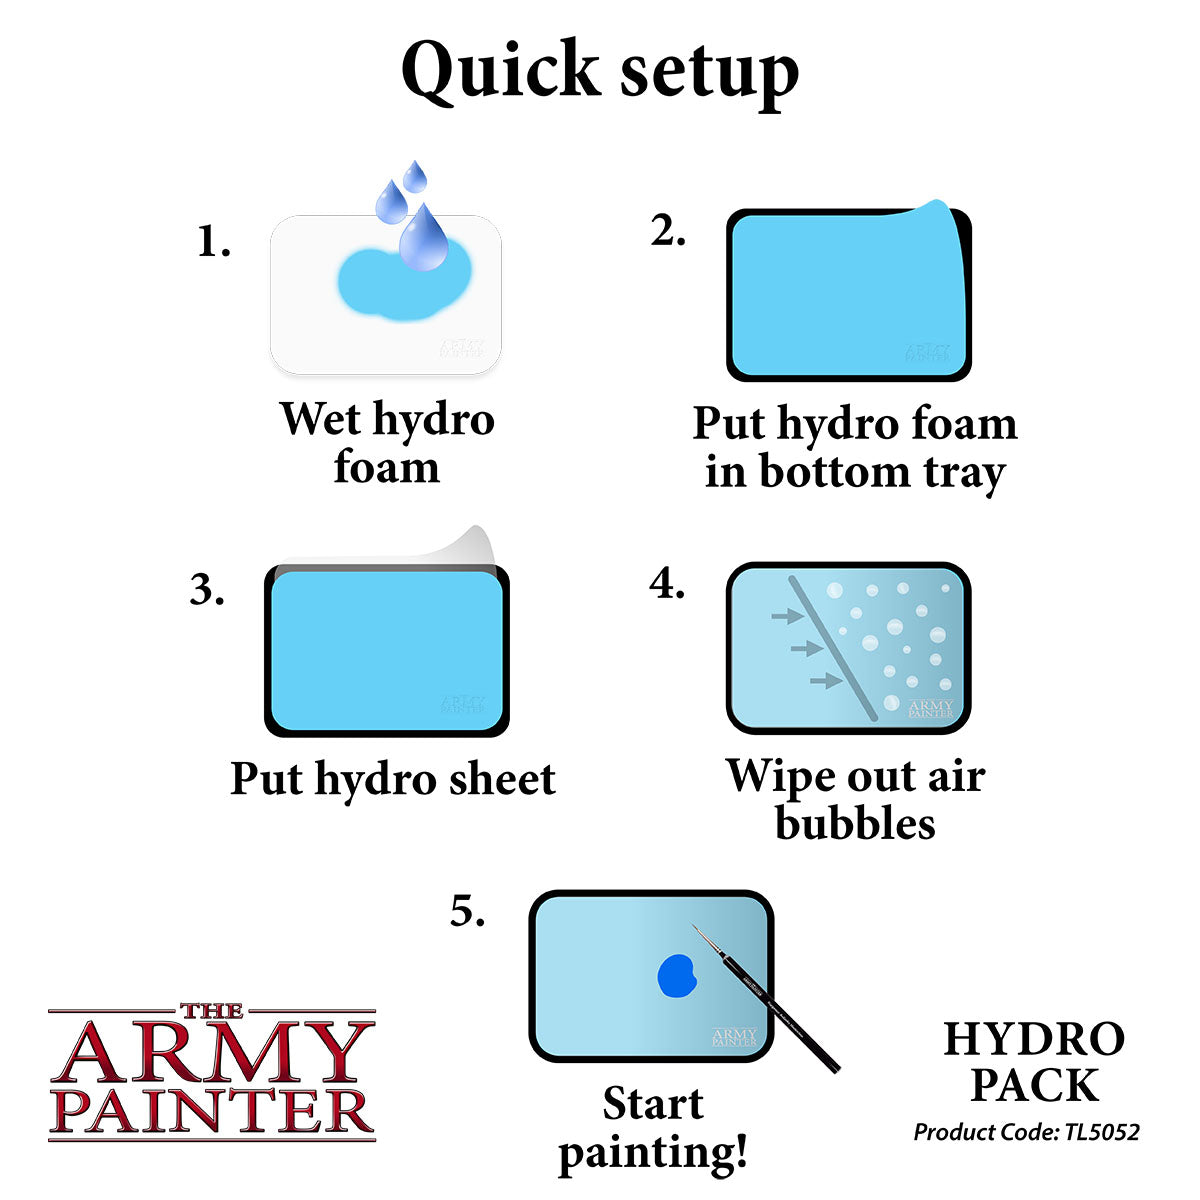 Army Painter Hydro Pack setup